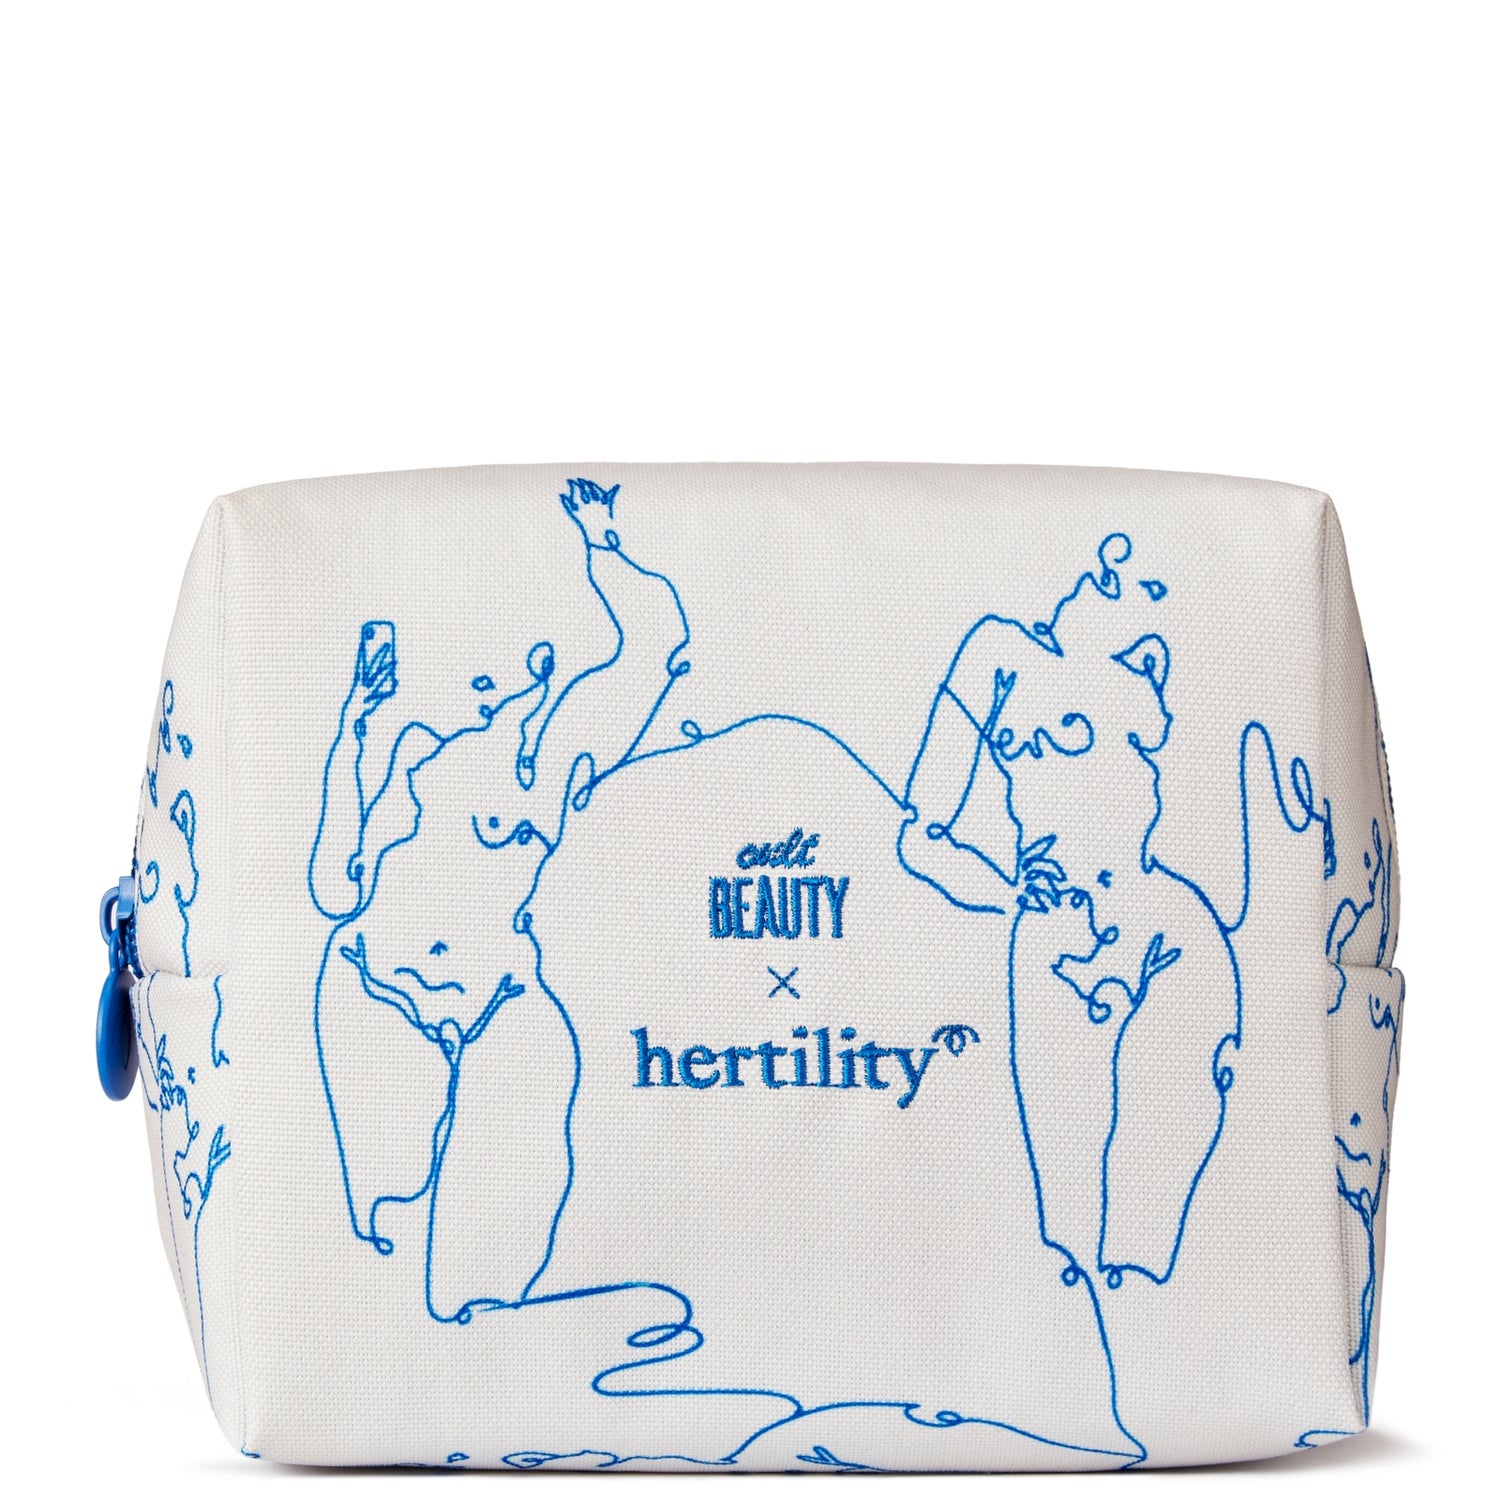 Cult Beauty x Hertility Make up Bag